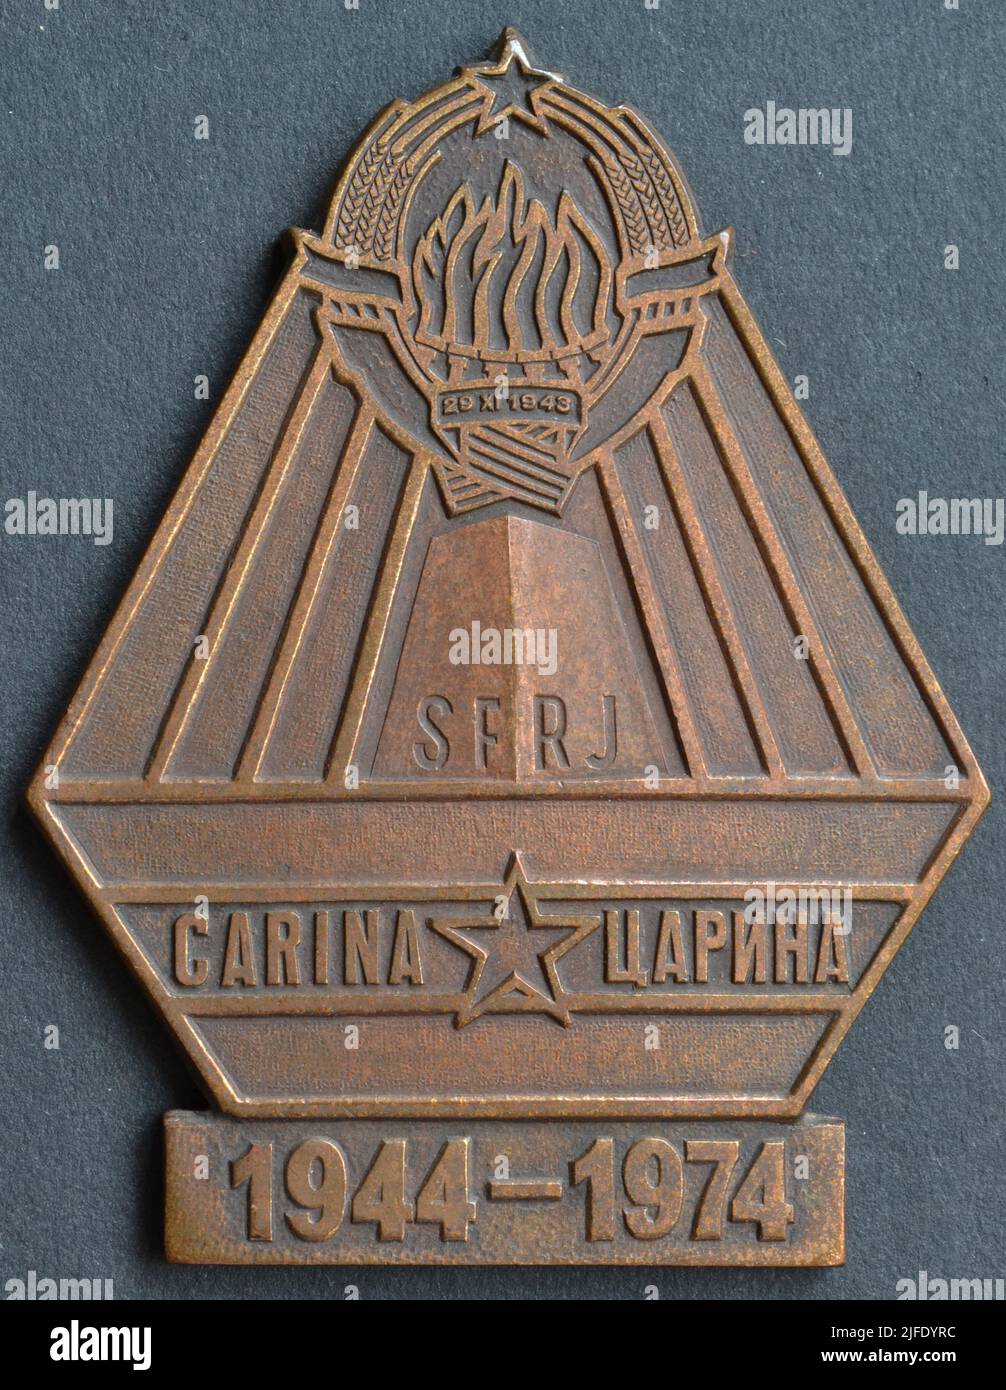 Medallion issued by Yugoslavia, celebrating 30th anniversary of Yugoslavian customs, circa 1974. Stock Photo